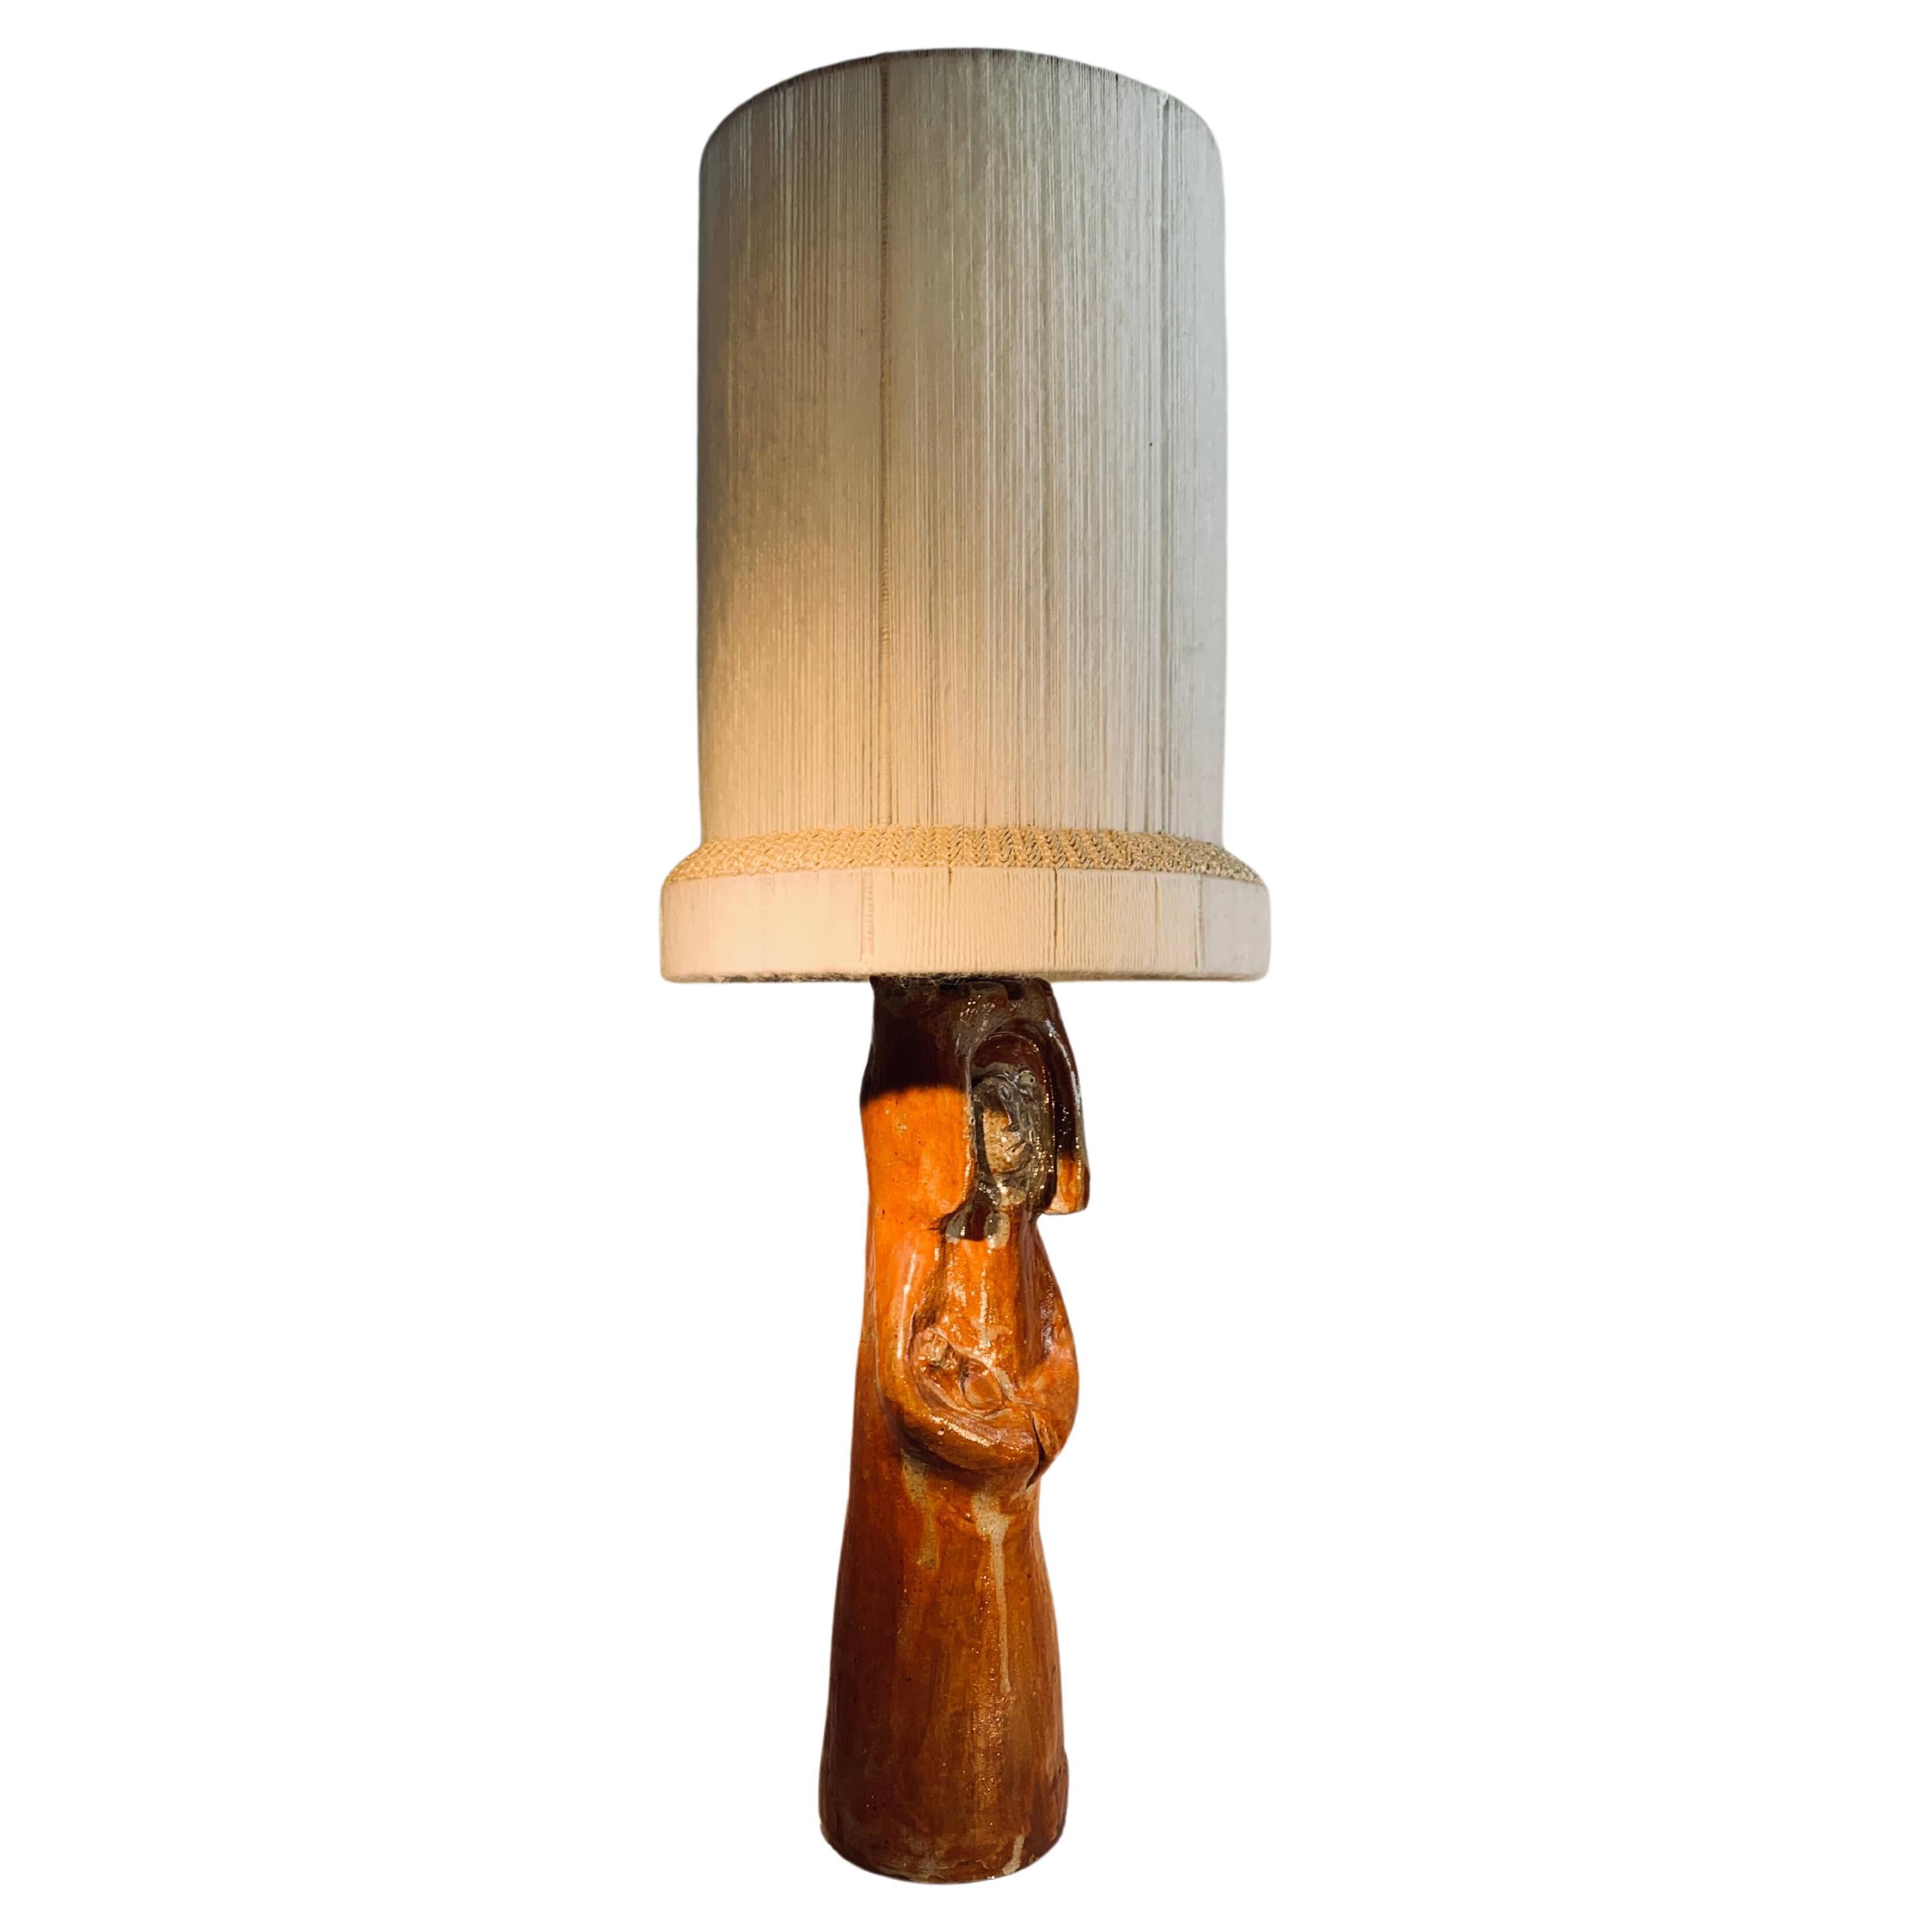 Sculpture lamp For Sale